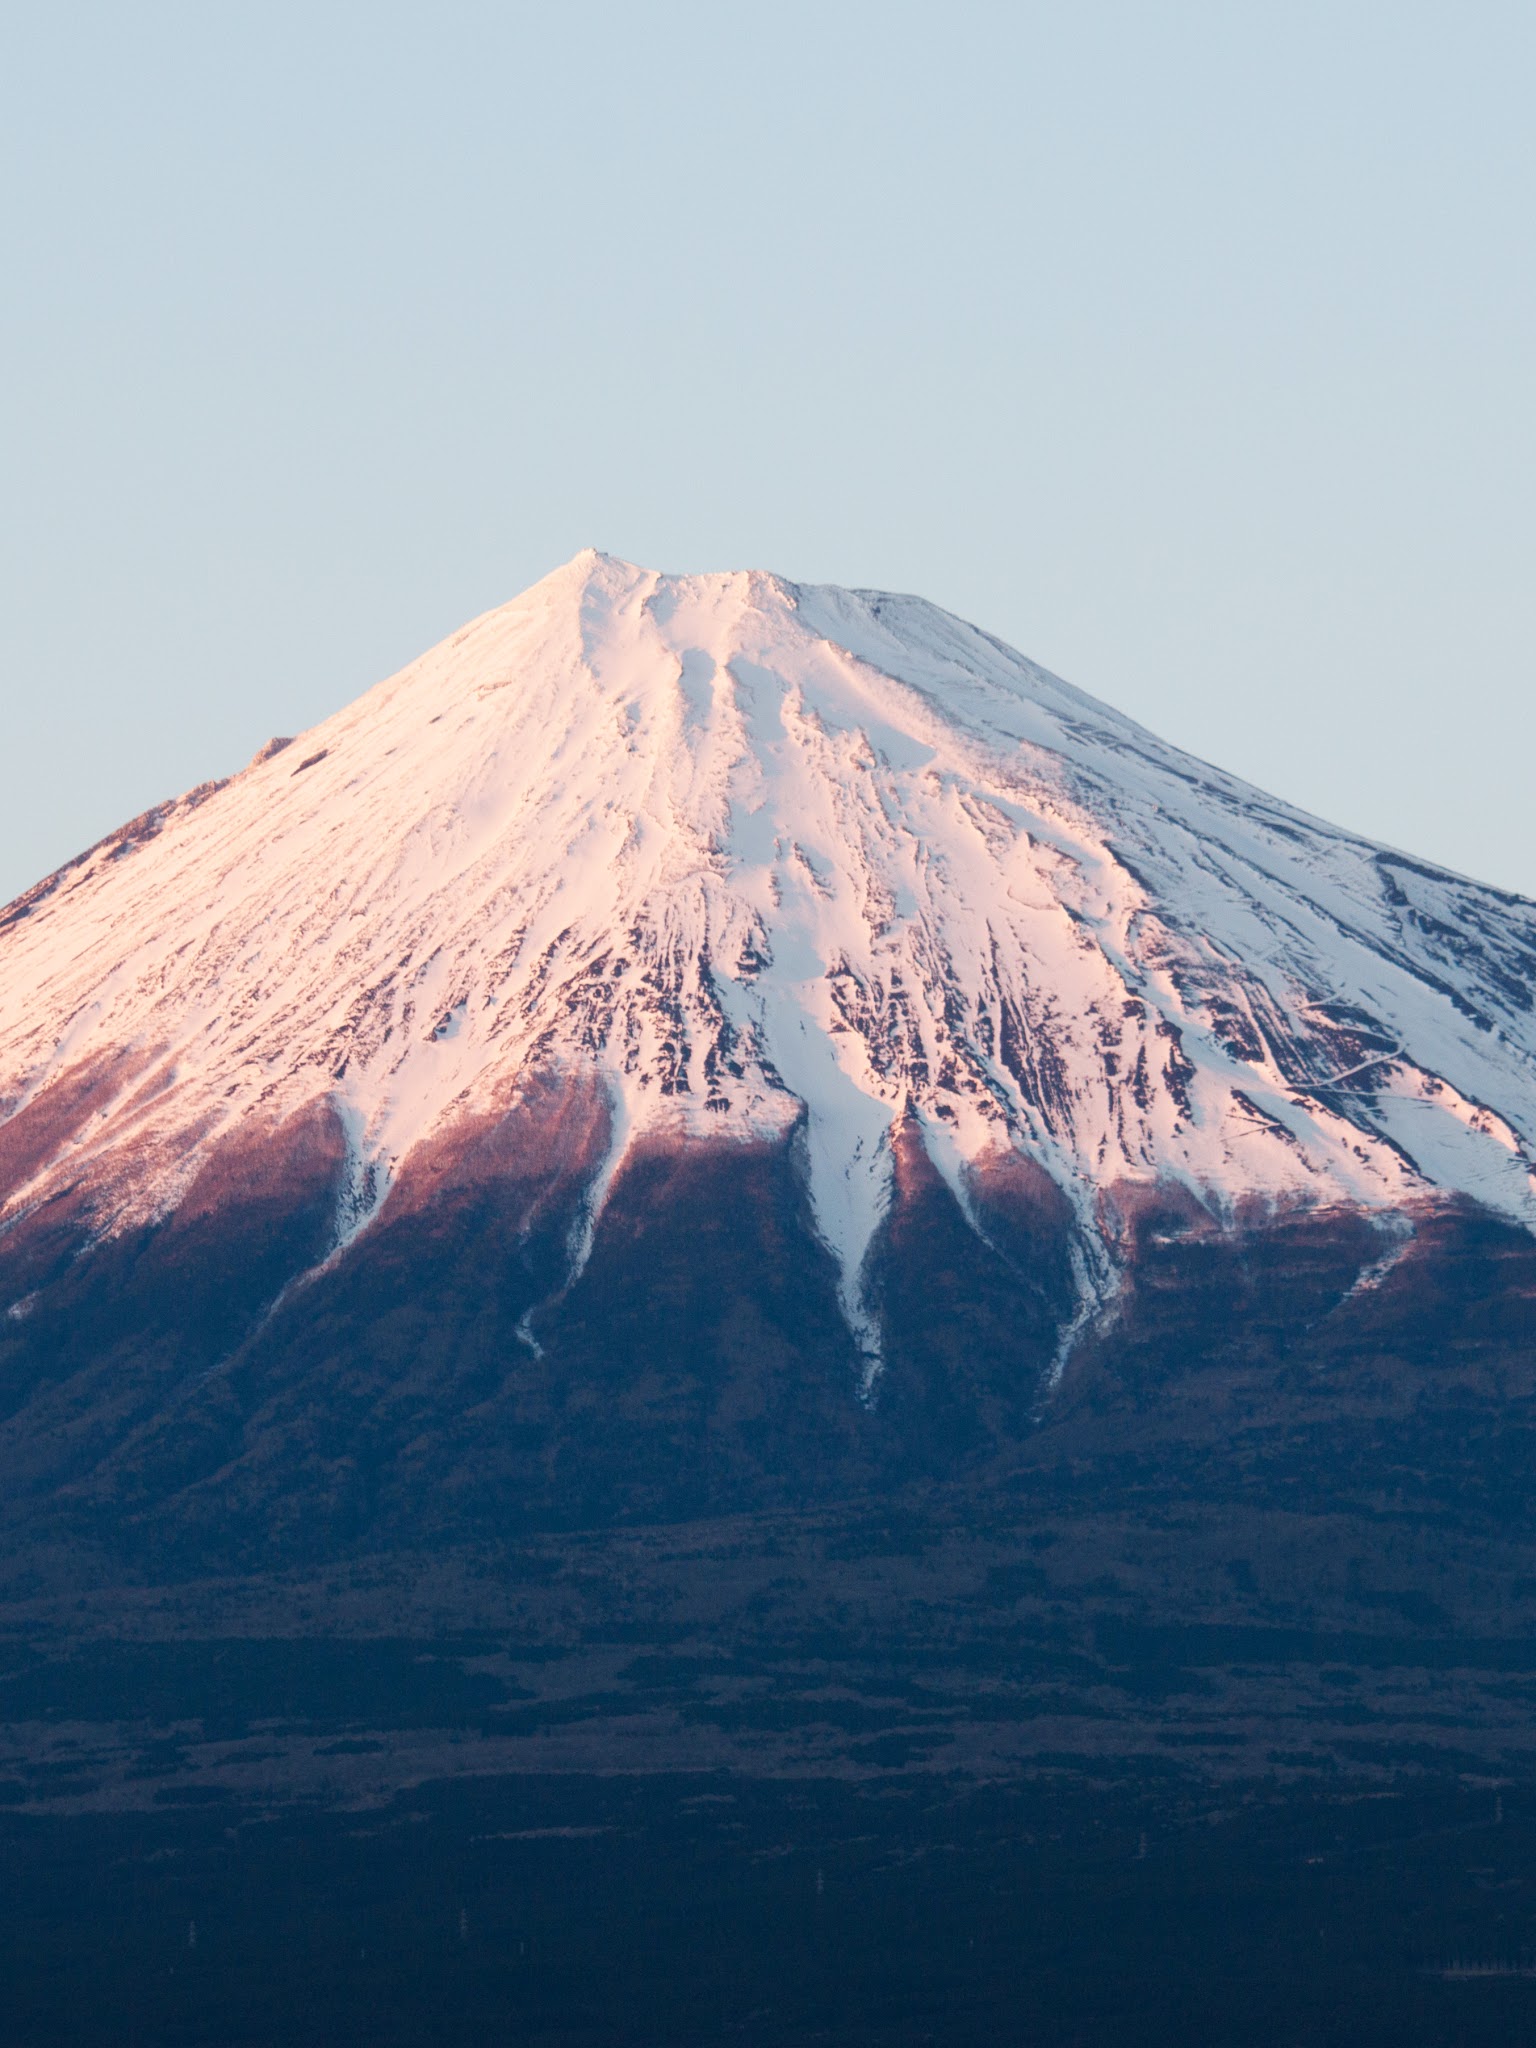 Mount Fuji Nightscape Wallpapers